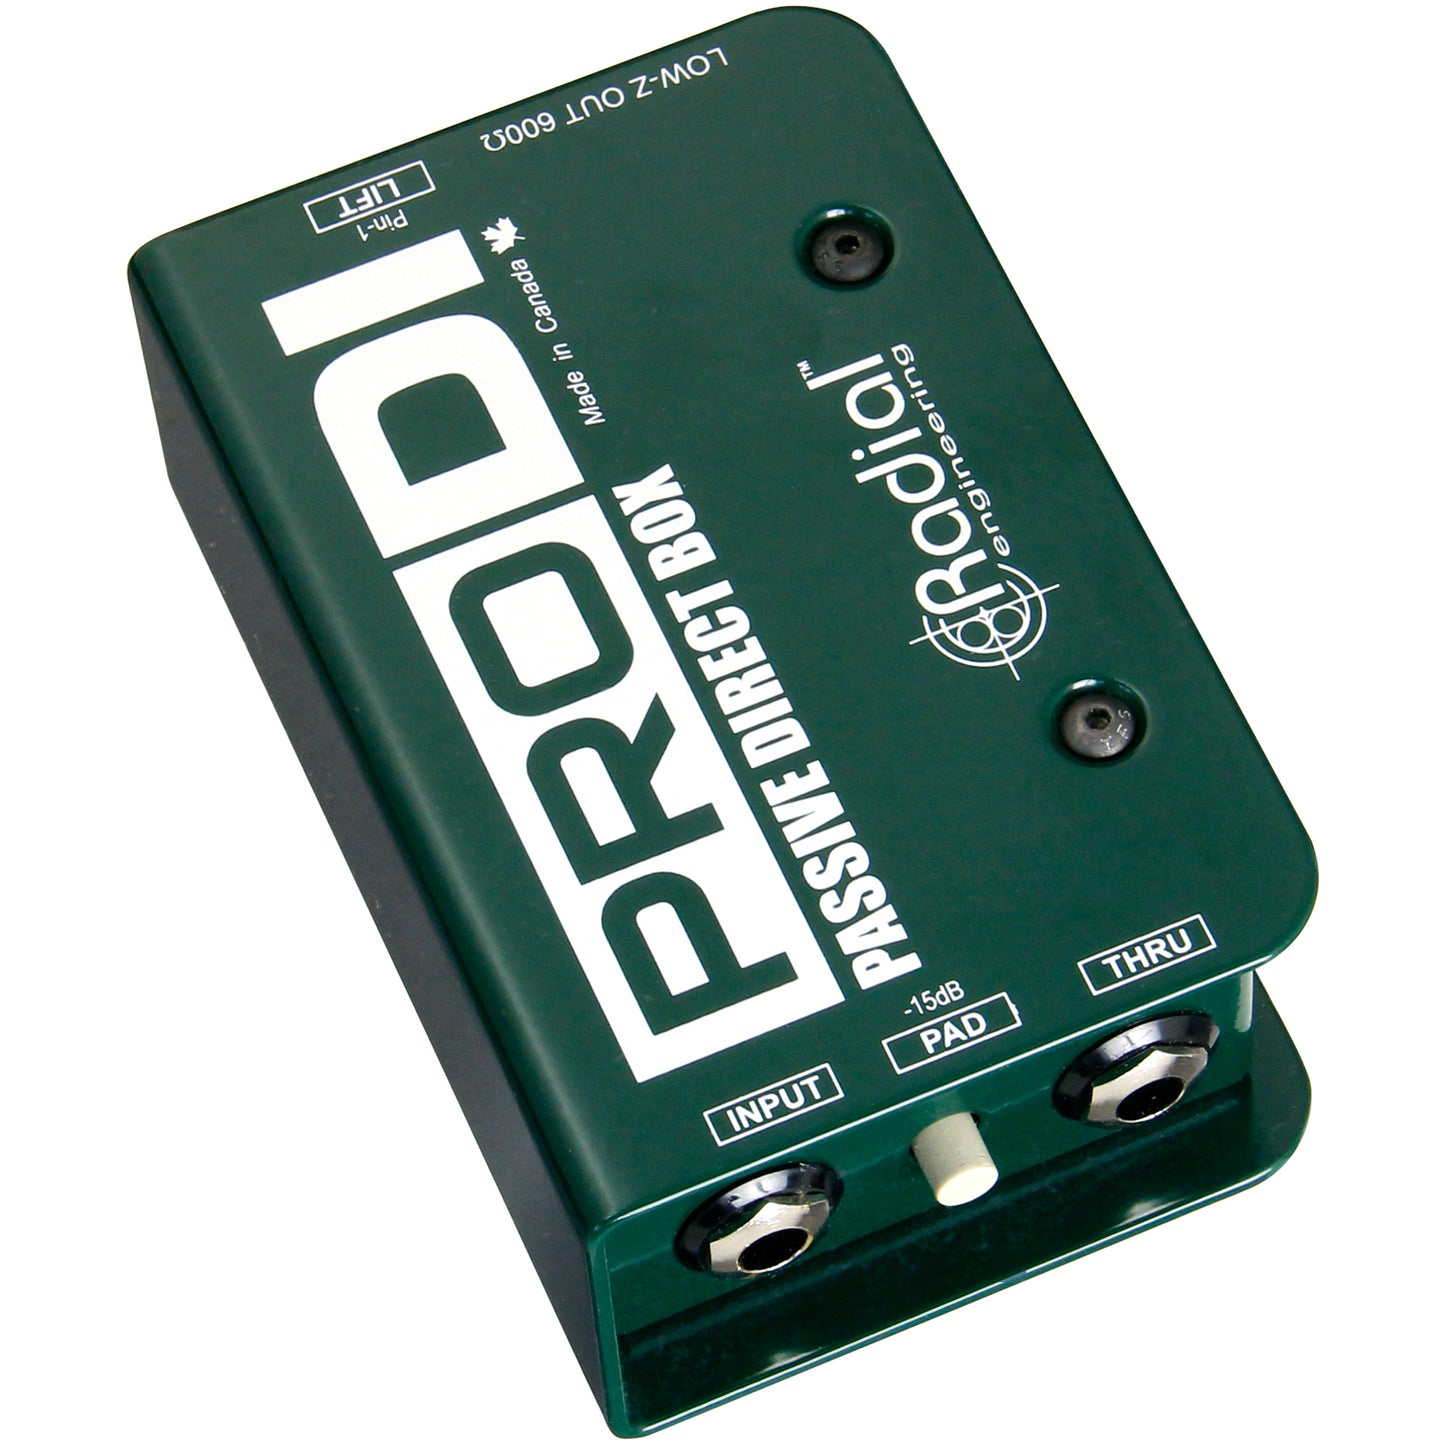 Radial Engineering ProDI Passive Direct Box